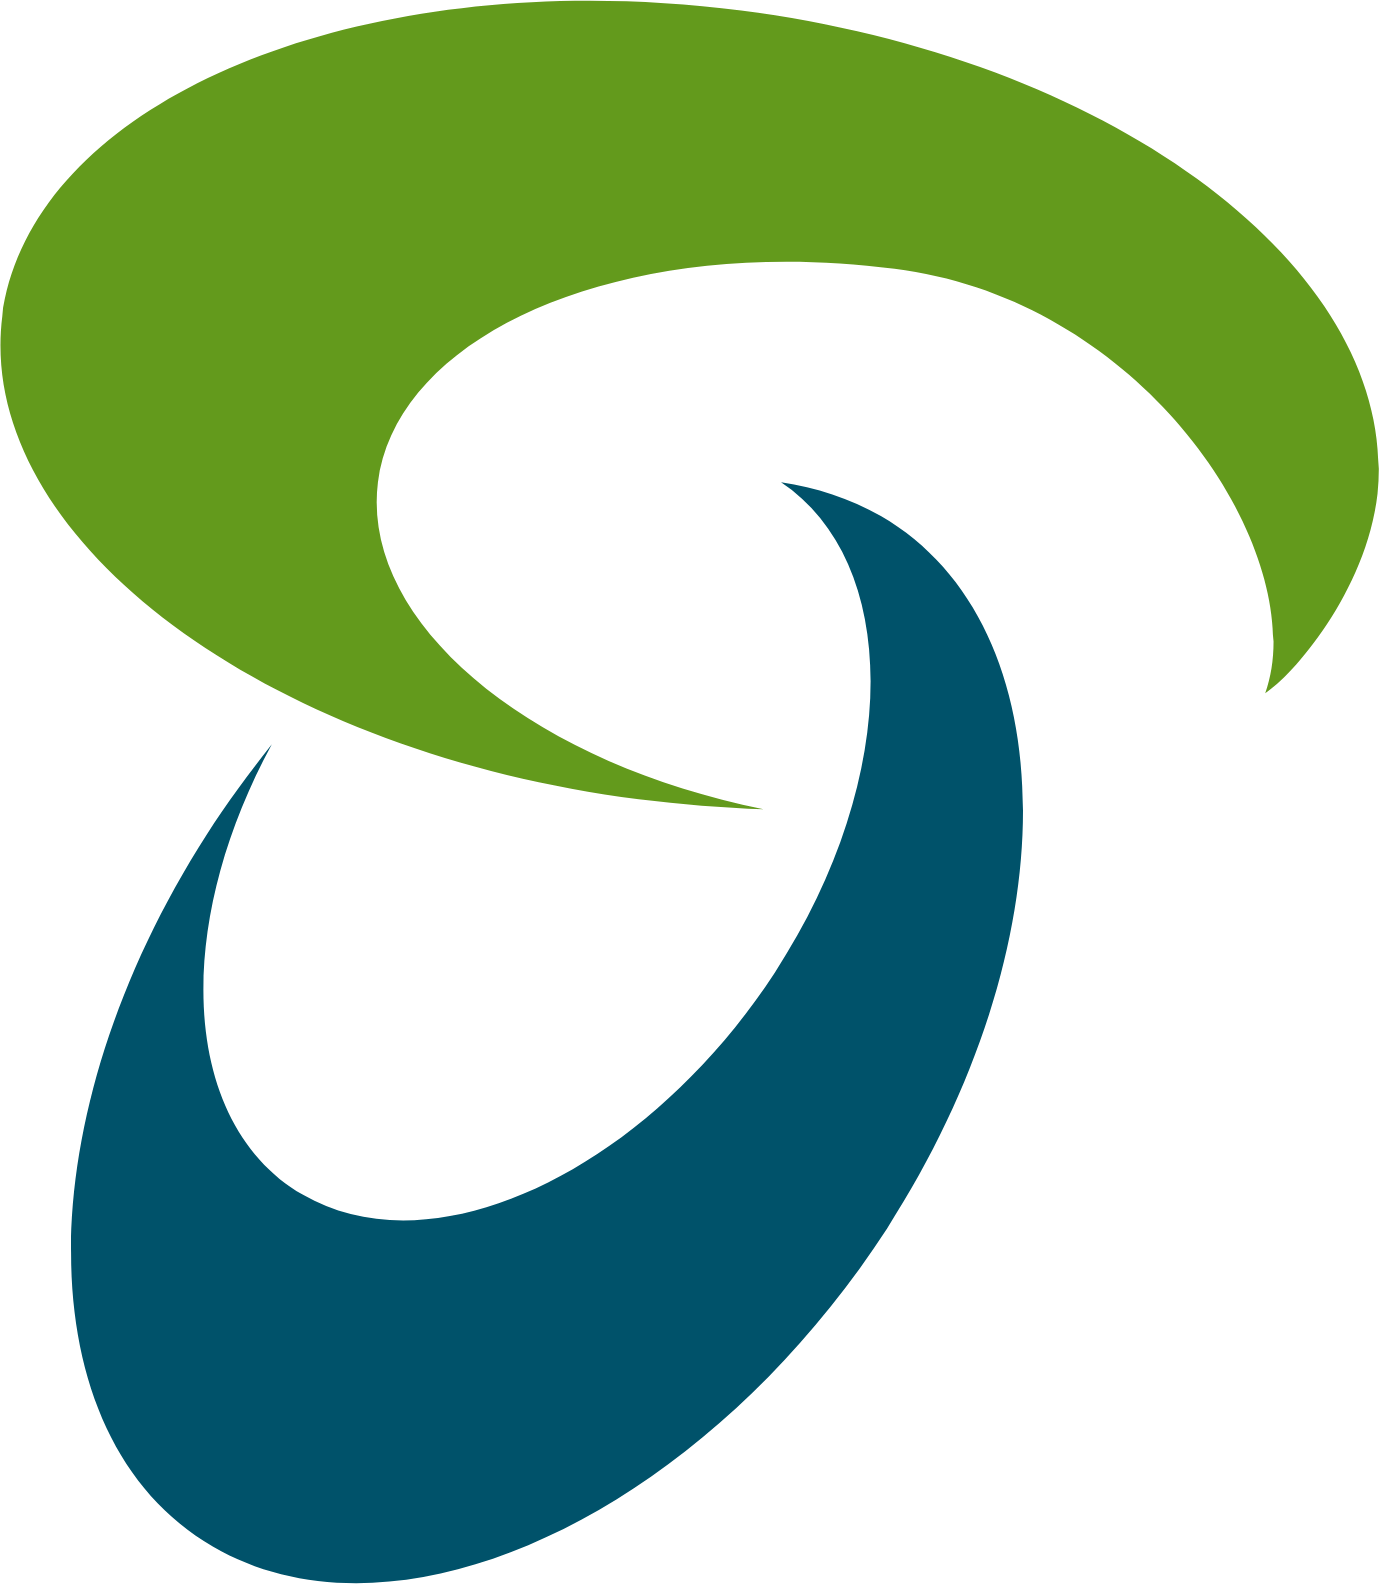 ProShares logo (transparent PNG)